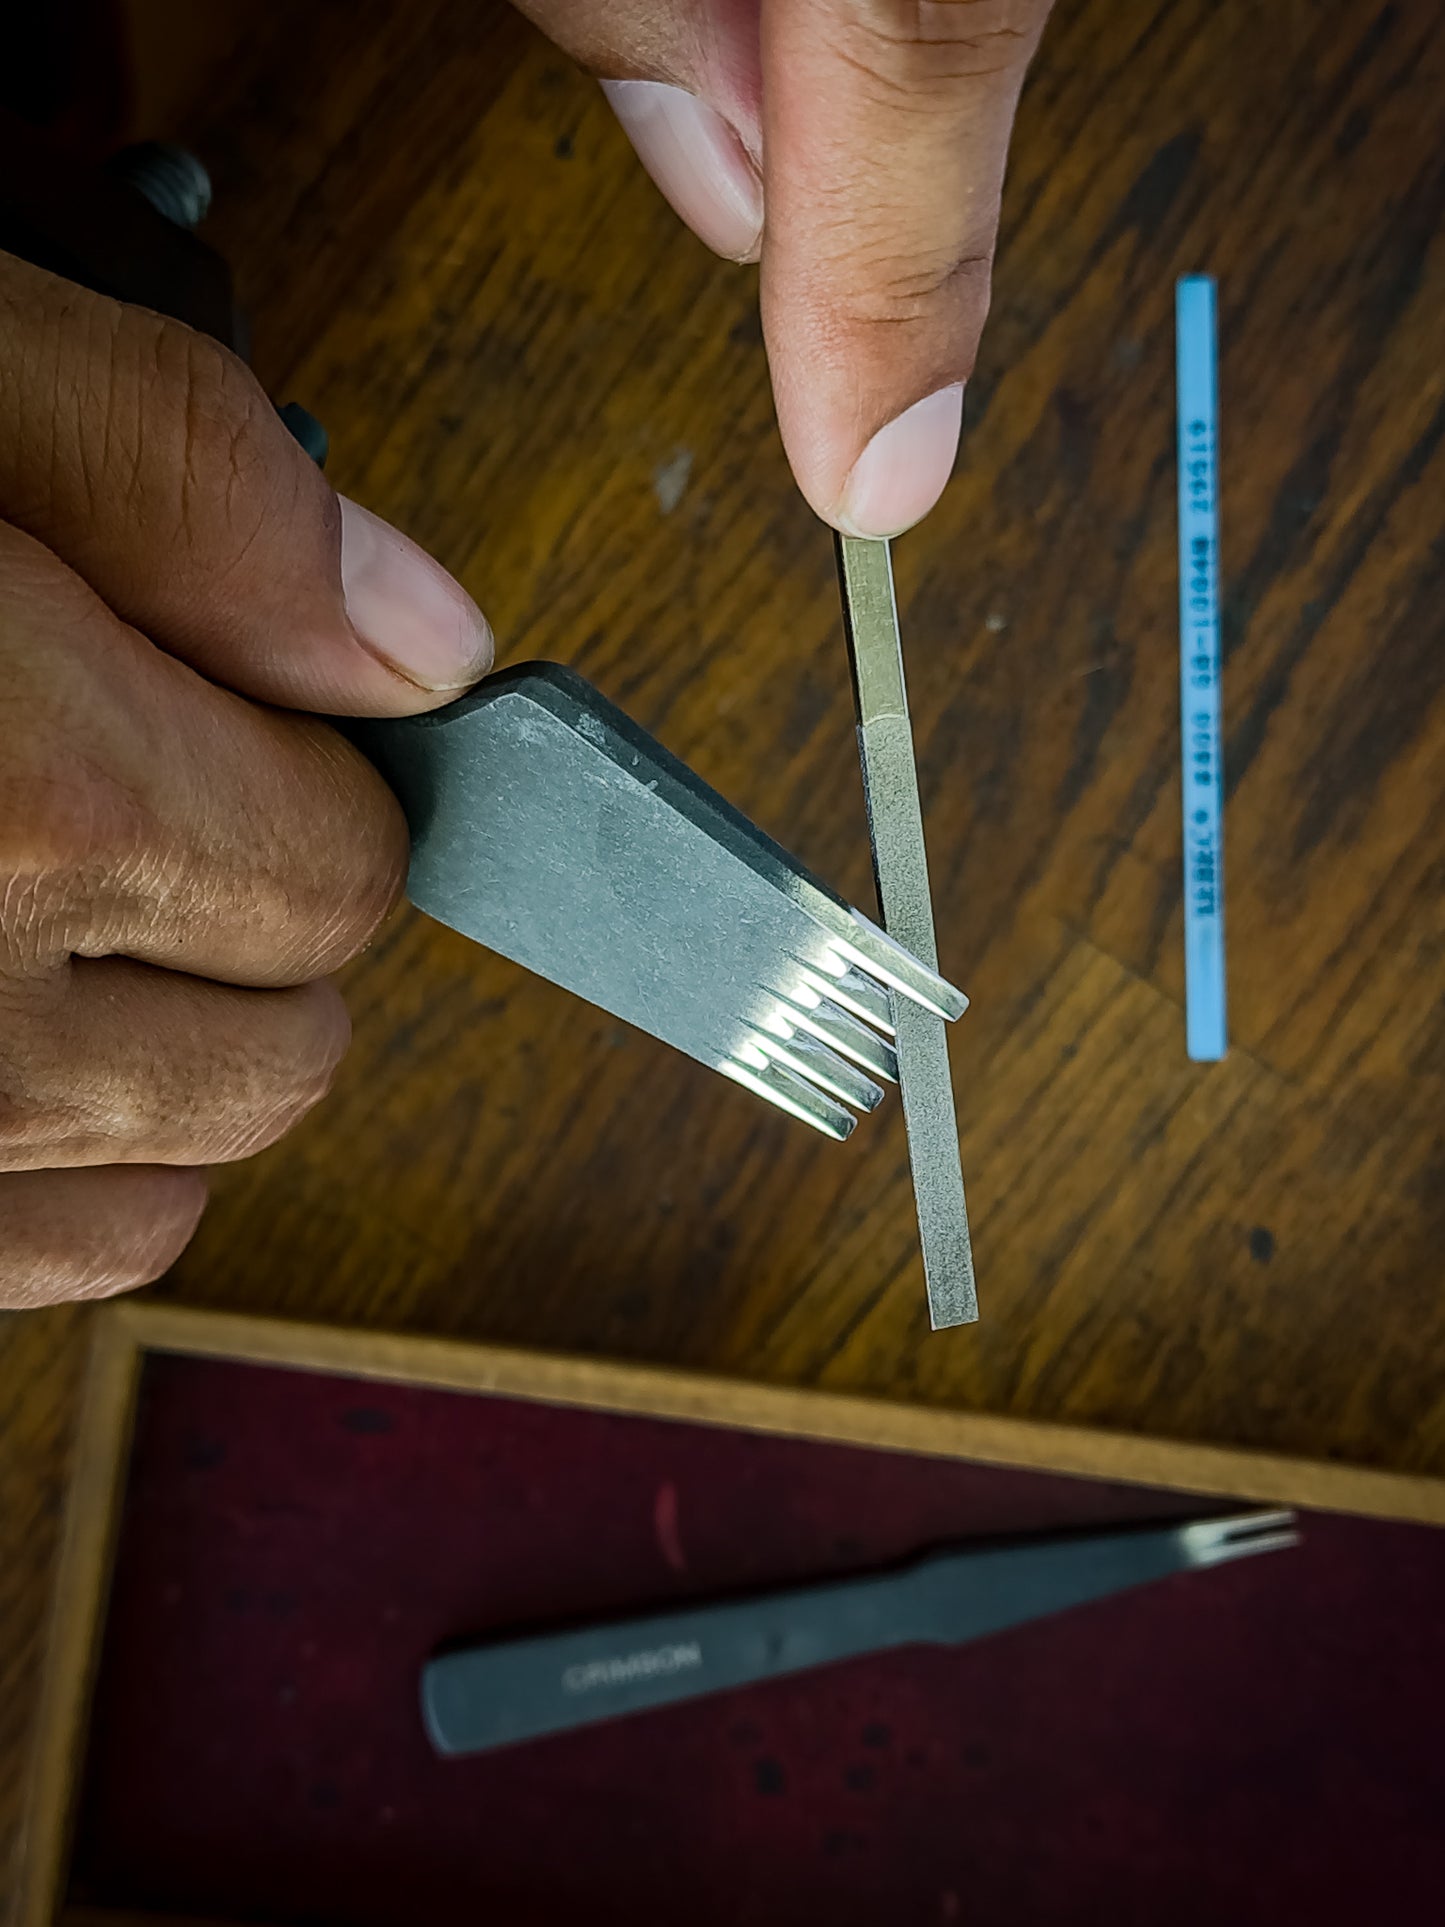 French Irons Sharpening Kit